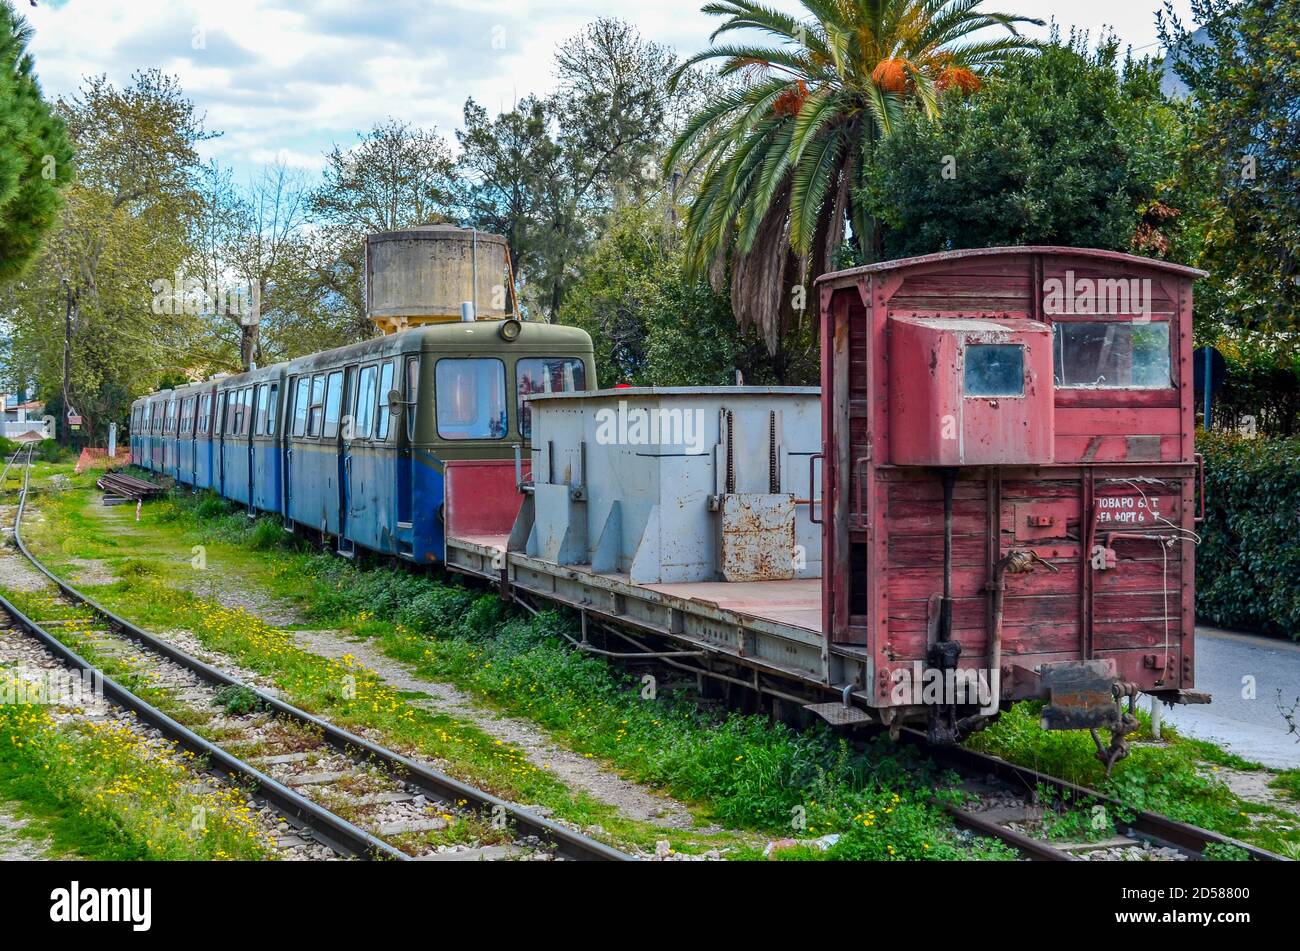 Kalavryta Greece -The old historic steam locomotive of Odontotos railway travelling from Diakofto to Kalavrita station. Stock Photo